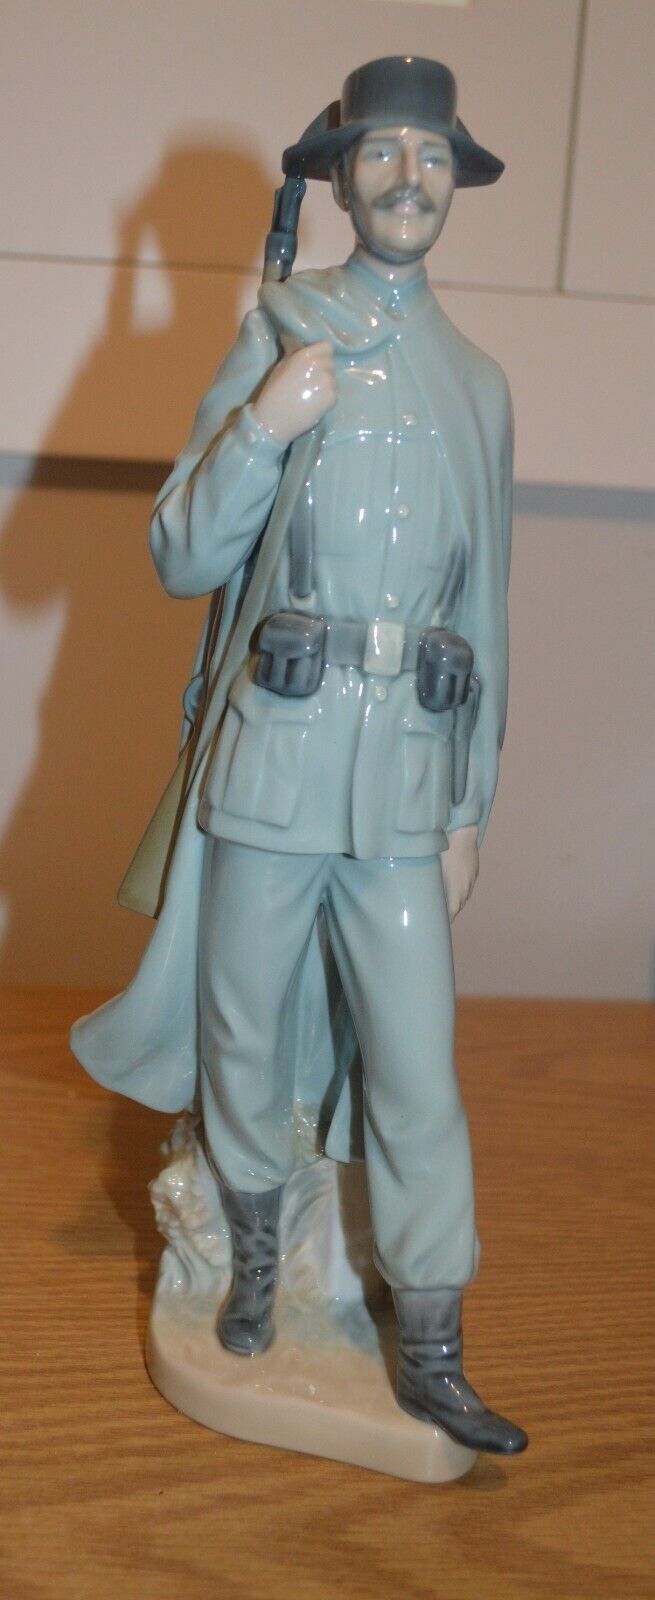 Spanish Soldier Lladro Figurine, 11-3/4” tall, KM6 - $125.00